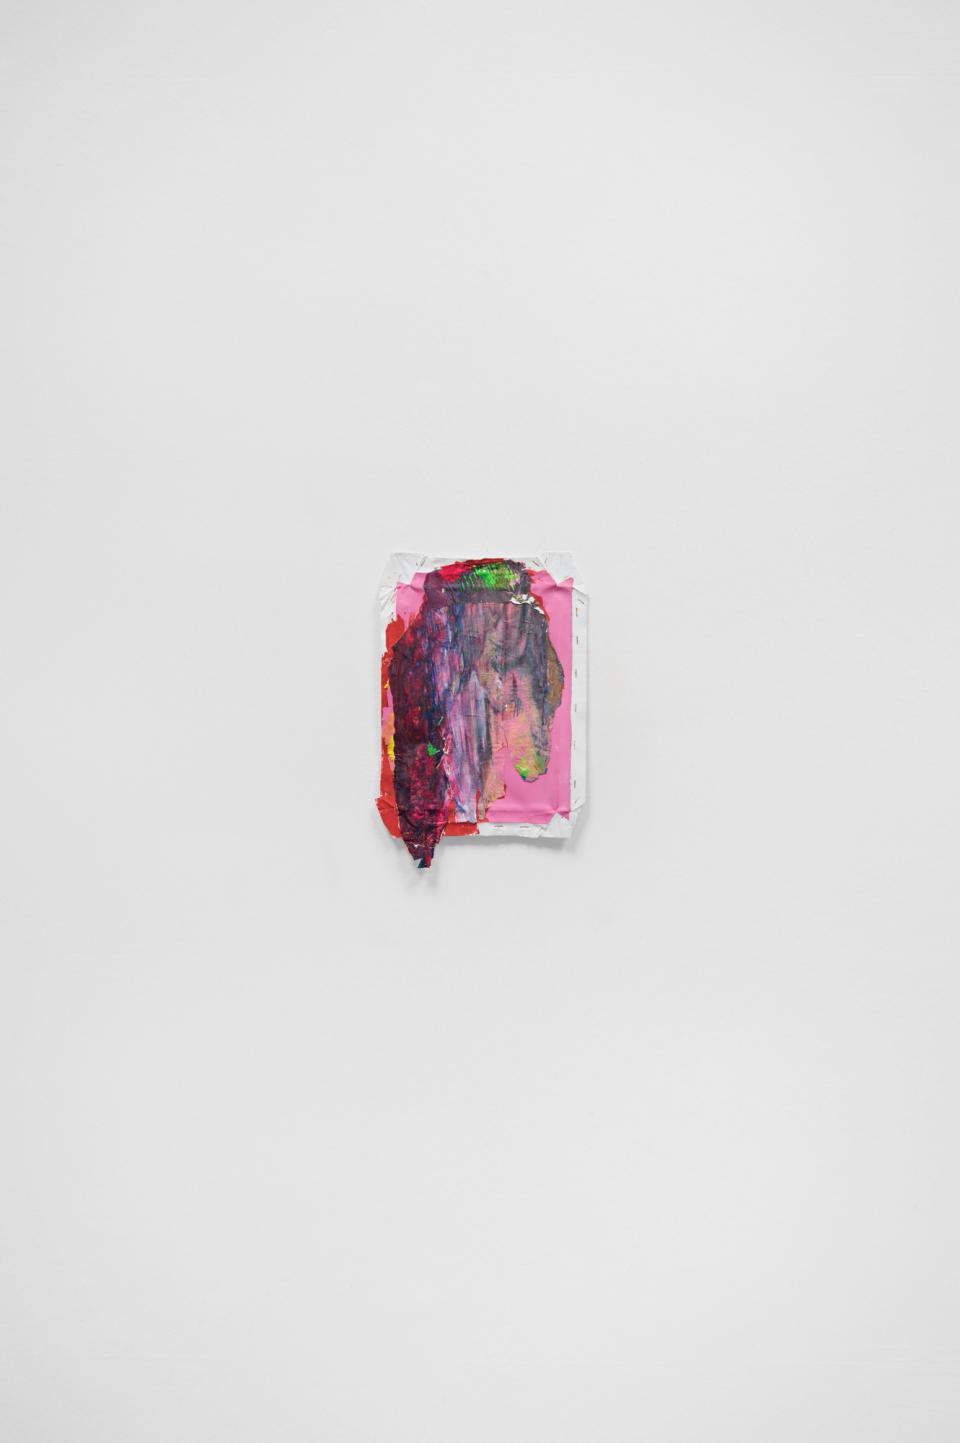 ohne Titel (050413), 2013,Acrylfarbe, Gewebe,42 x 28 cm, zweiseitig